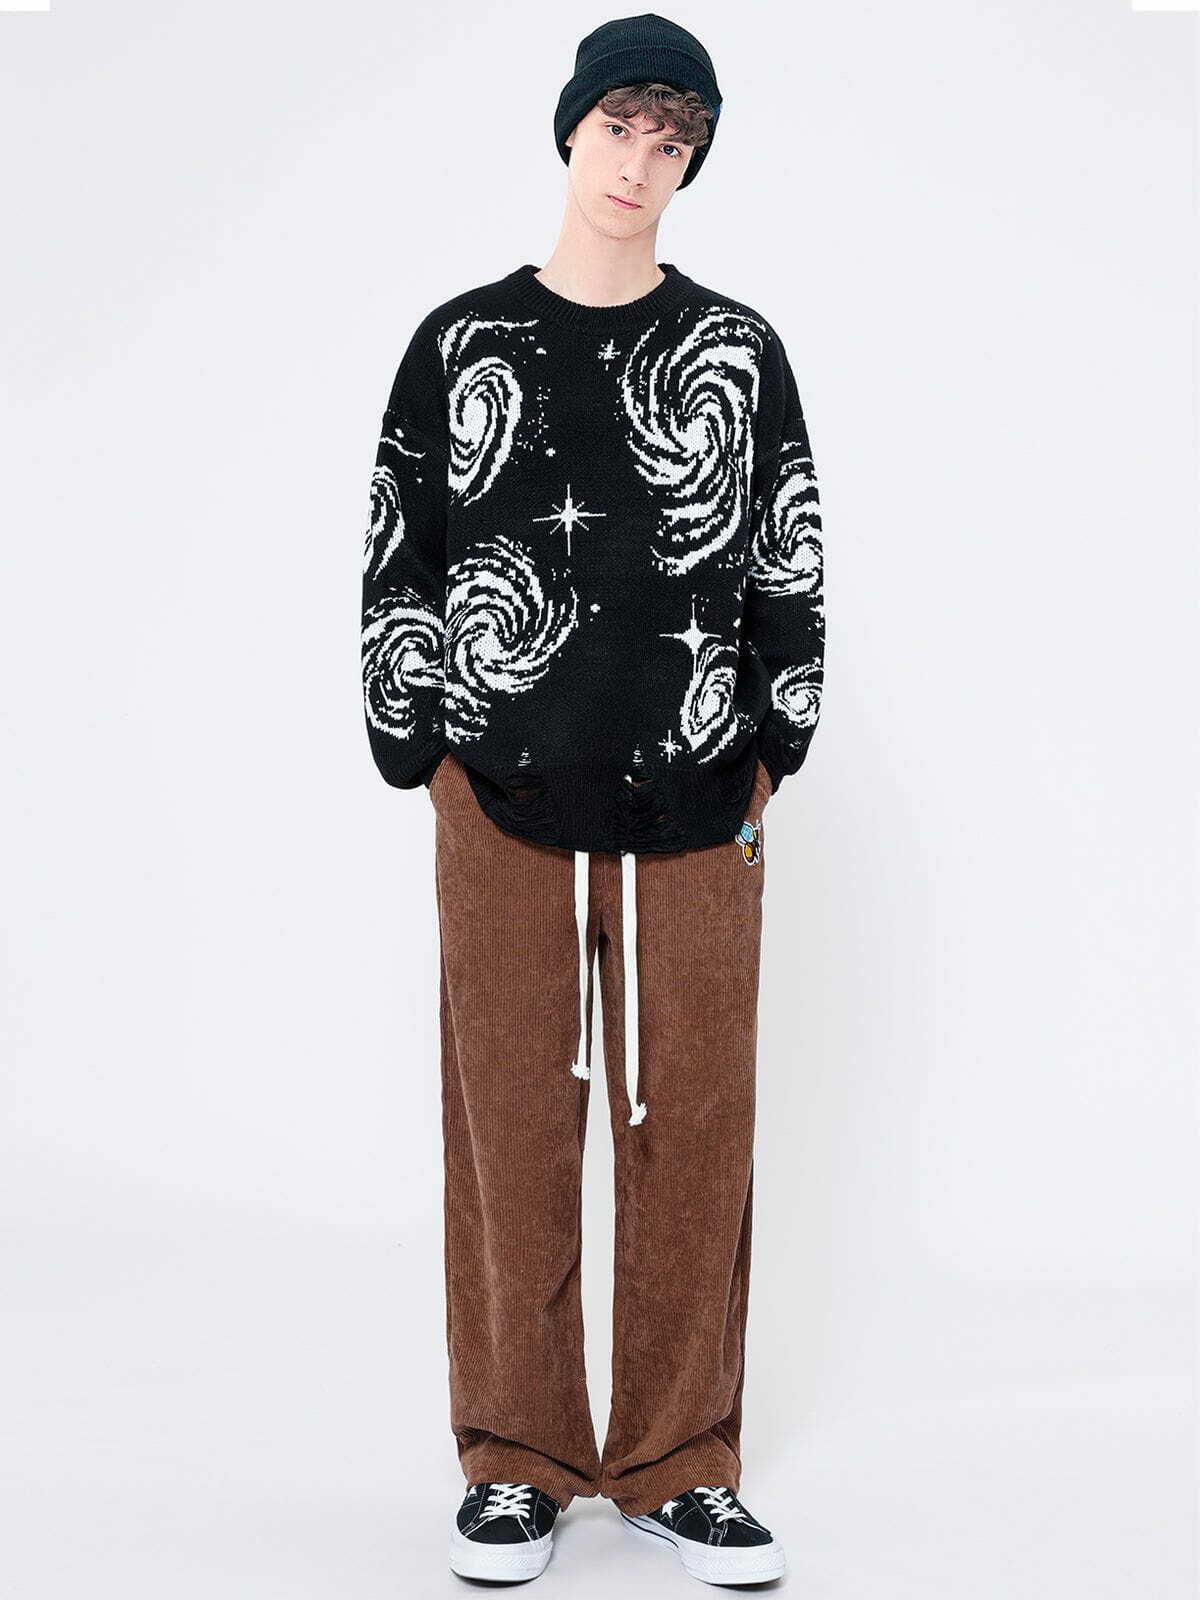 starry night jacquard knit sweater edgy urban streetwear chic 4540